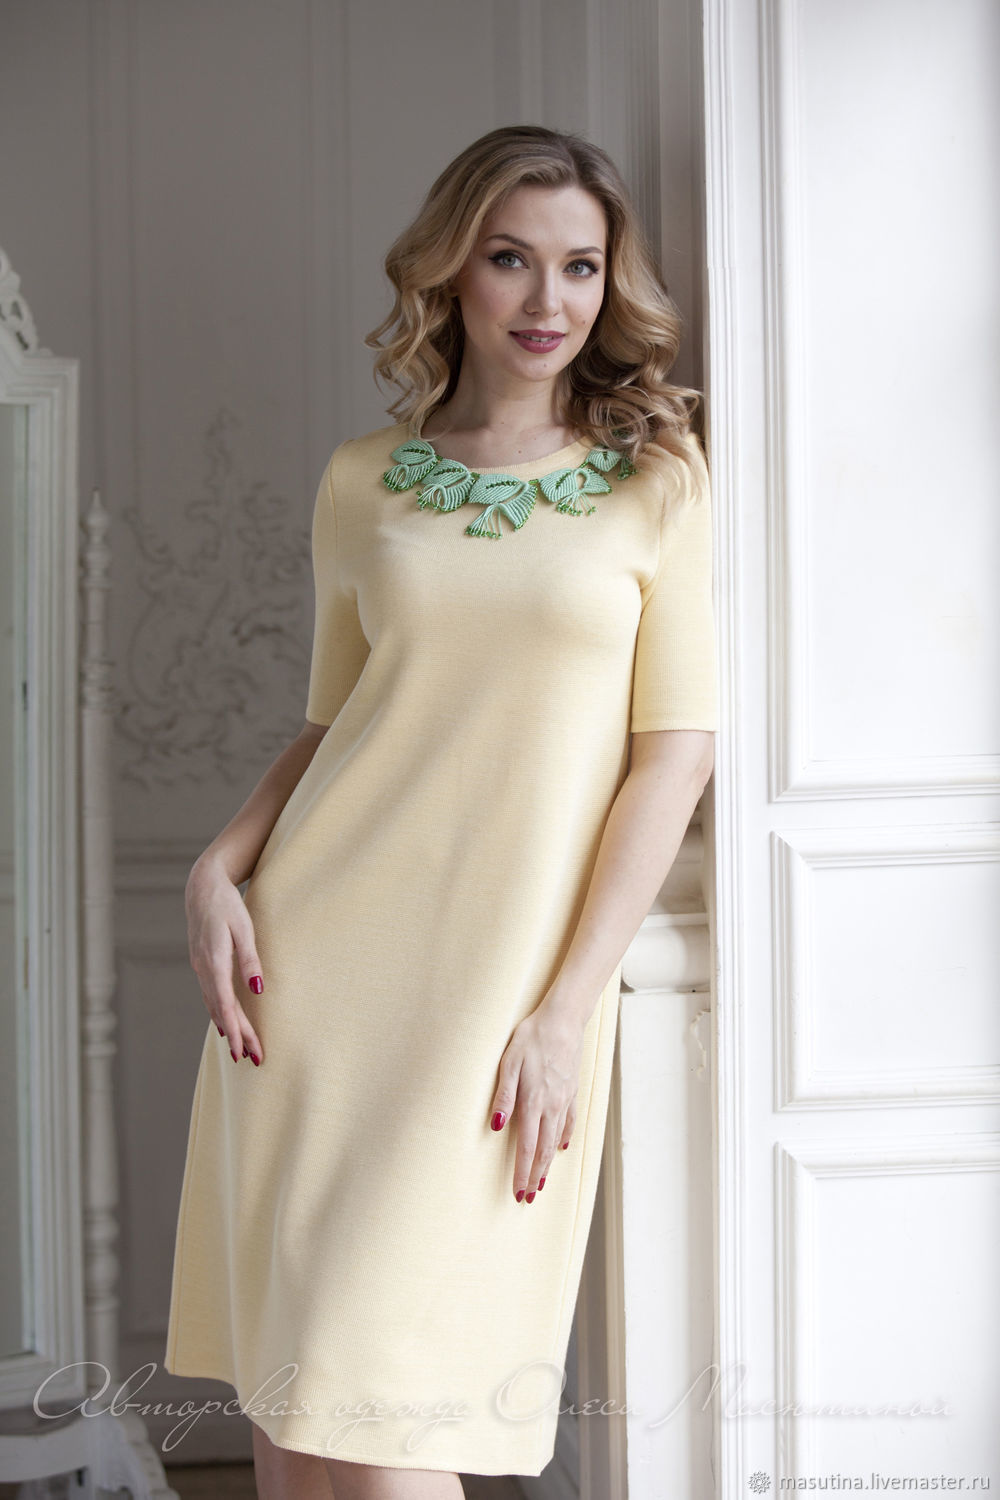 Dress 'a Bright aura', Dresses, St. Petersburg,  Фото №1